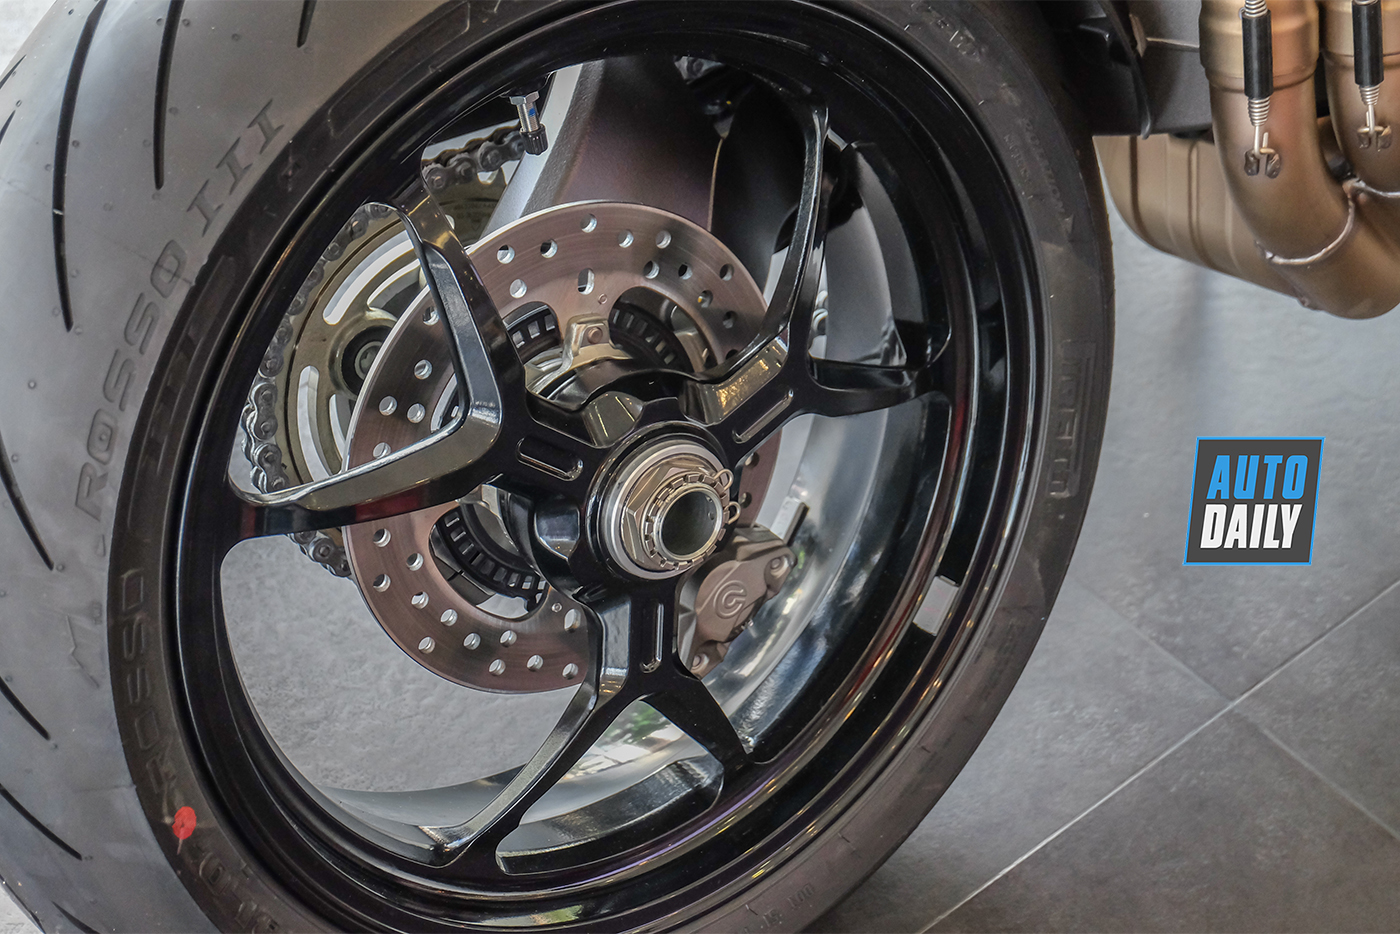 400 triệu, chọn Ducati Hypermotard 950 2019 hay Triumph Tiger 800 XRT 2019? ducati-hypermotard-950-2019-80.jpg